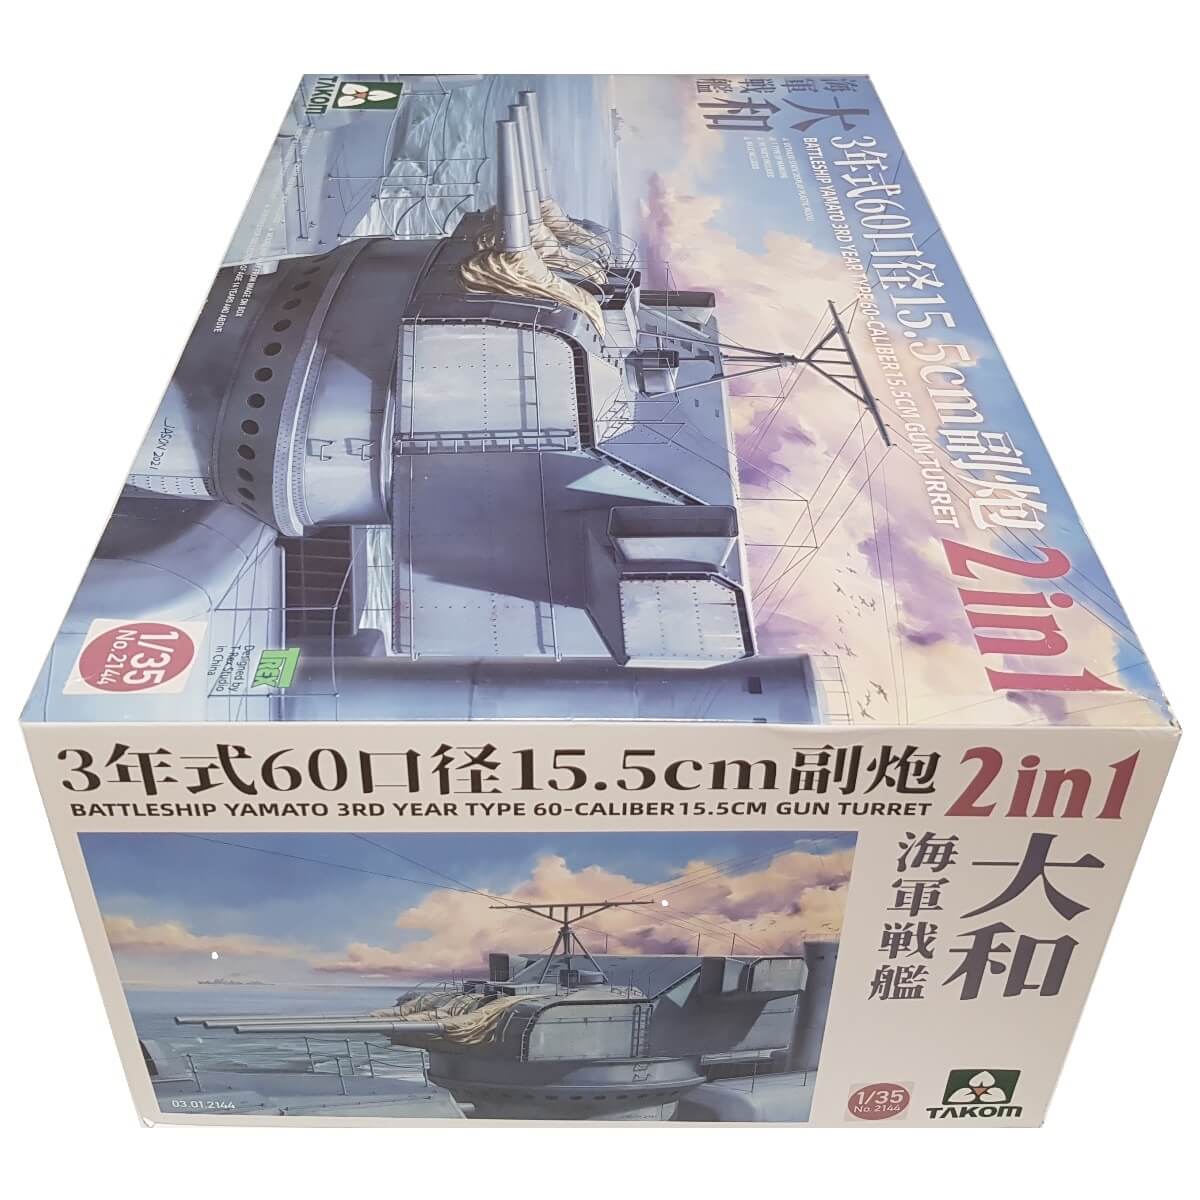 1:35 Battleship Yamato 15.5 cm/60 3rd Year Type Gun Turret - TAKOM